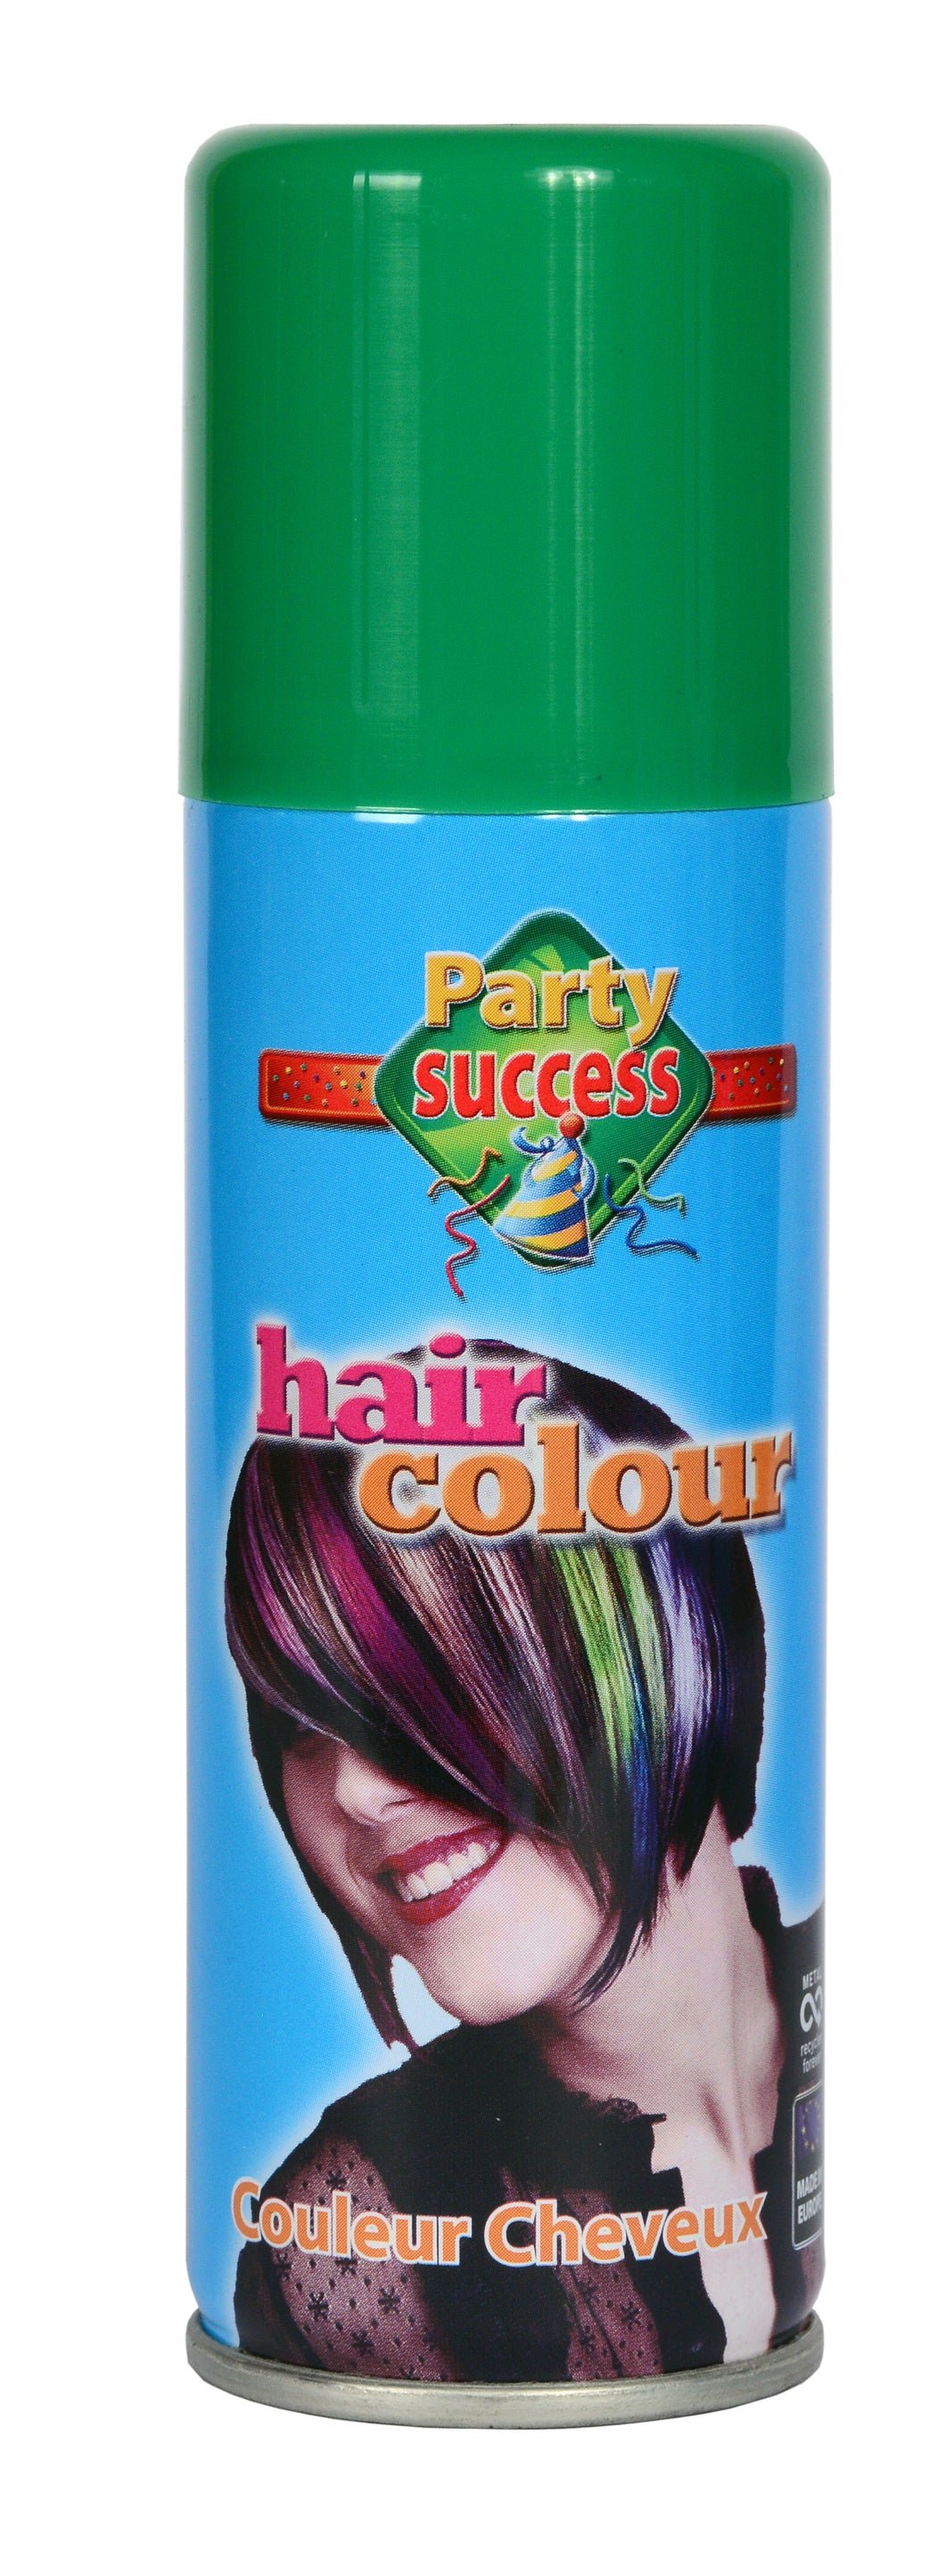 Party Success Hair Colour Spray 125ml - green